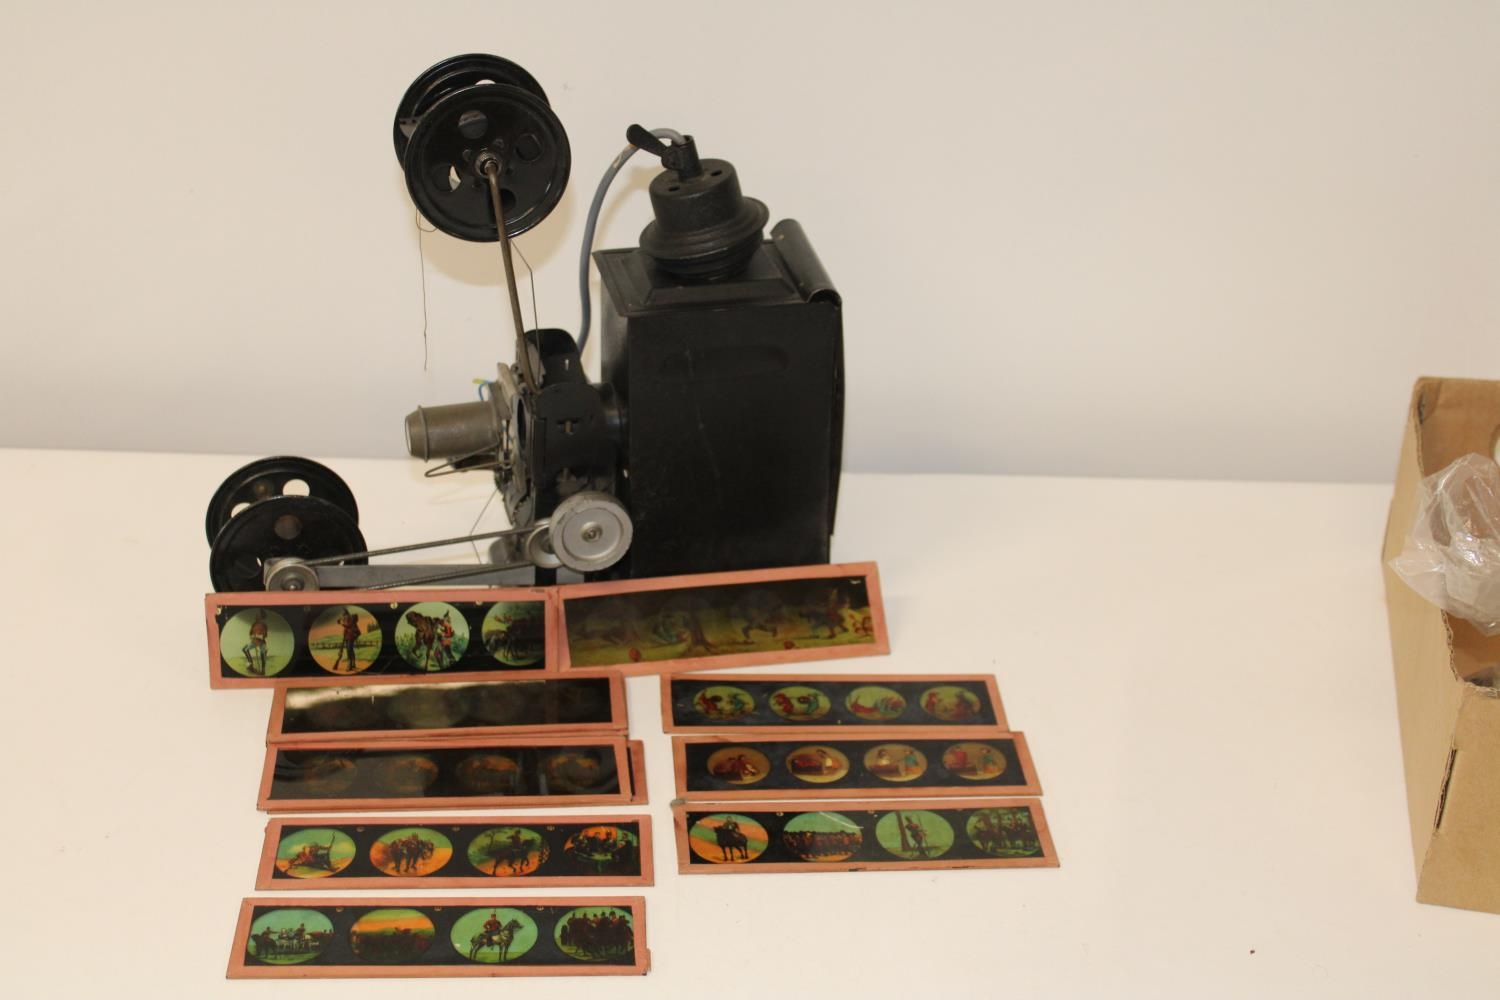 A vintage slide/film projector with some glass slides & films (some military related slides)